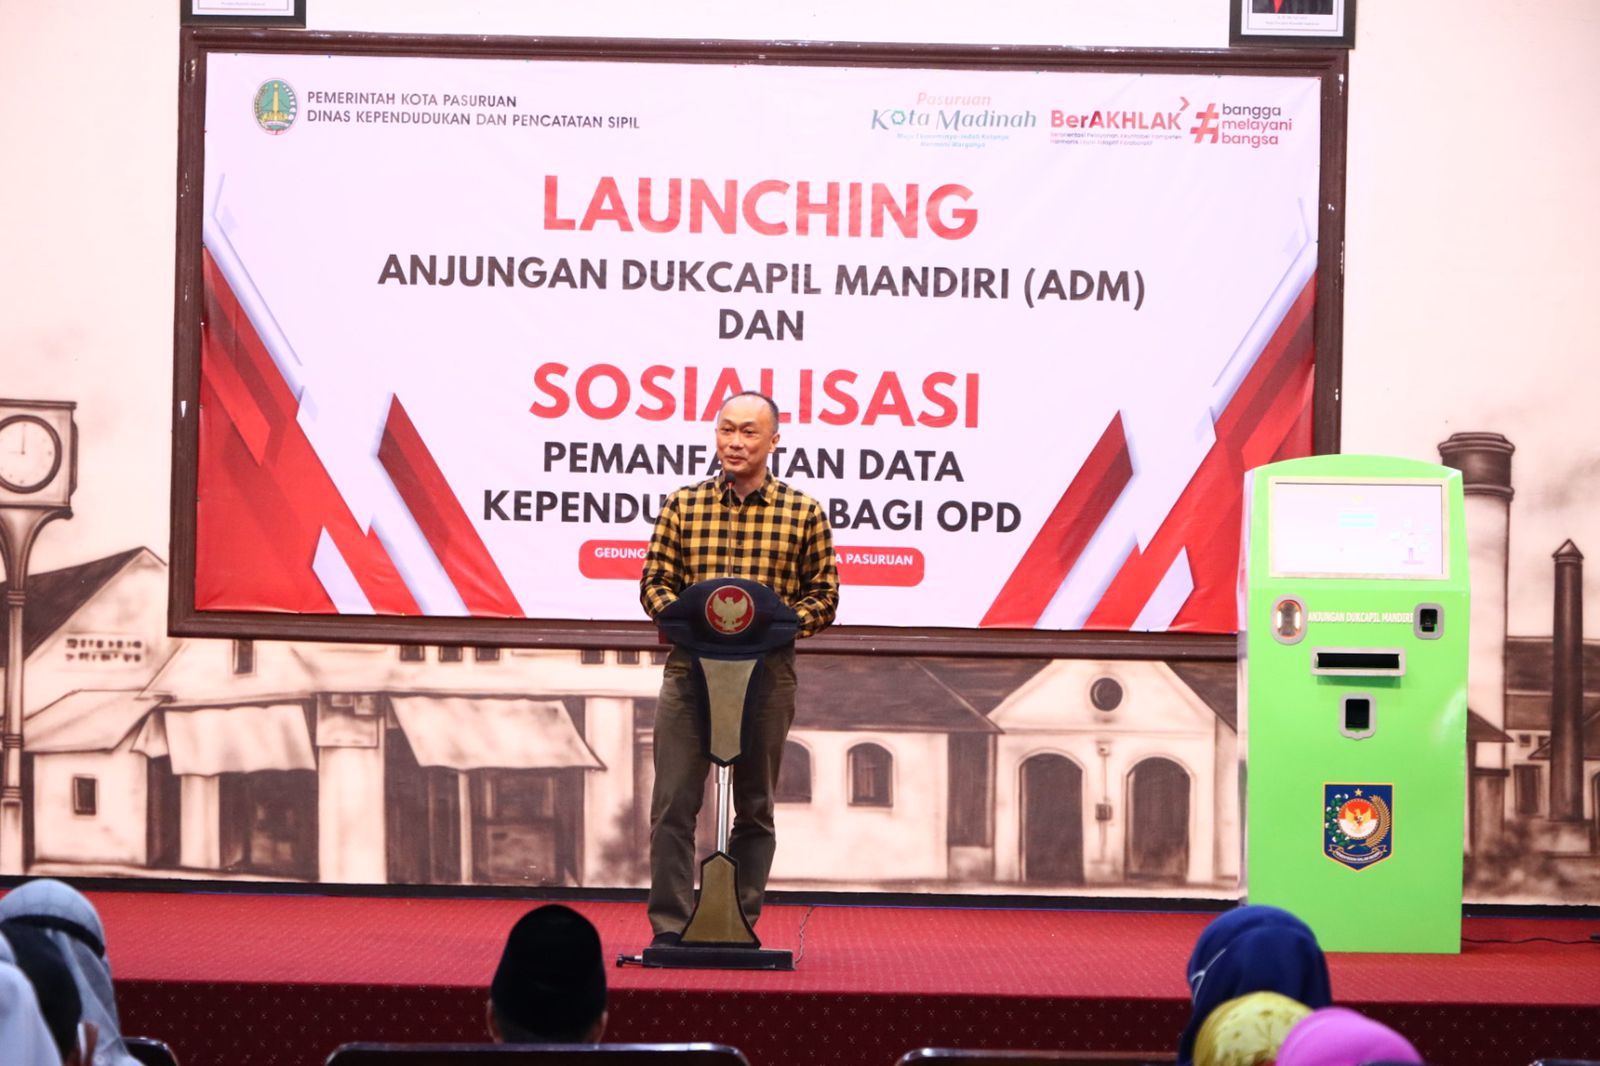 Launching ADM di Kota Pasuruan, Dirjen Zudan Ajak ASN Bangun Branding dan Marketing Daerahnya